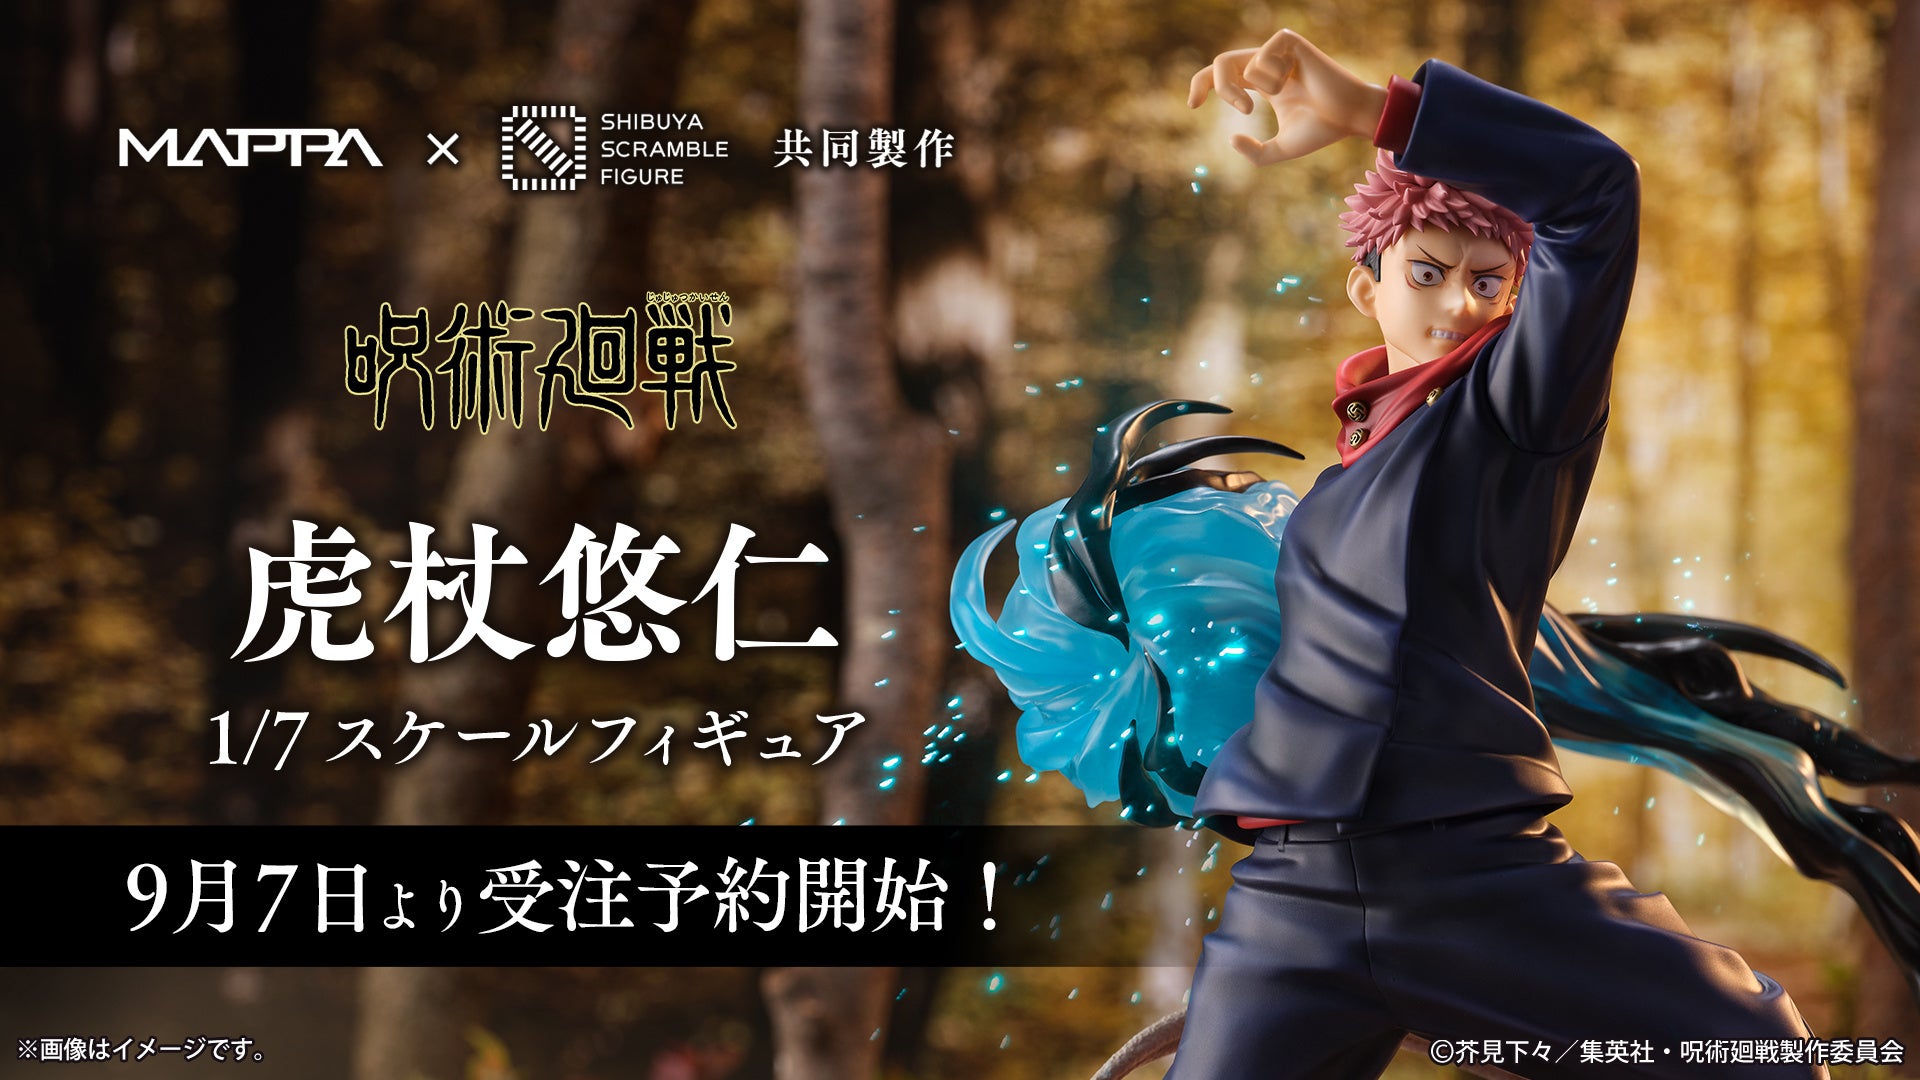 SHIBUYA SCRAMBLE FIGURE、TVアニメ「呪術廻戦」より「虎杖悠仁」を本日9月7日（木）から予約受付開始！